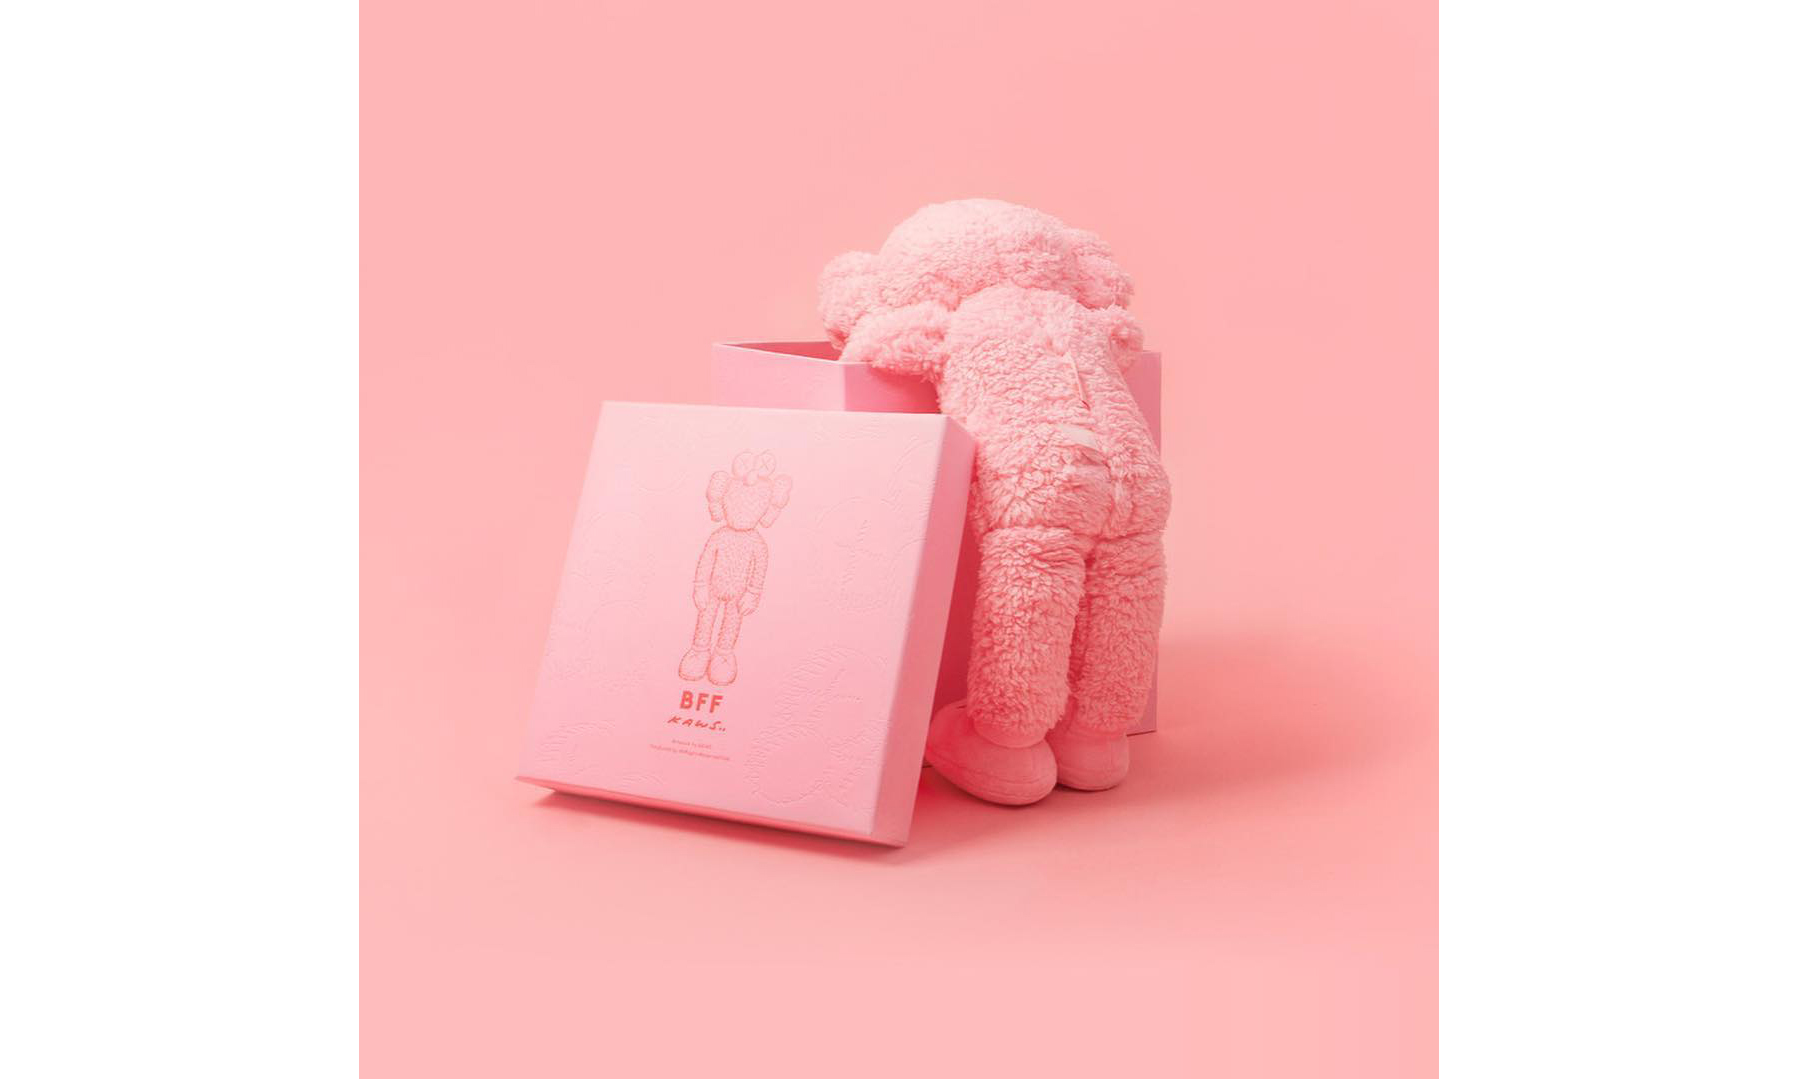 dior 亲民版?kaws 宣布粉色 bff 毛绒玩偶将于明日发售